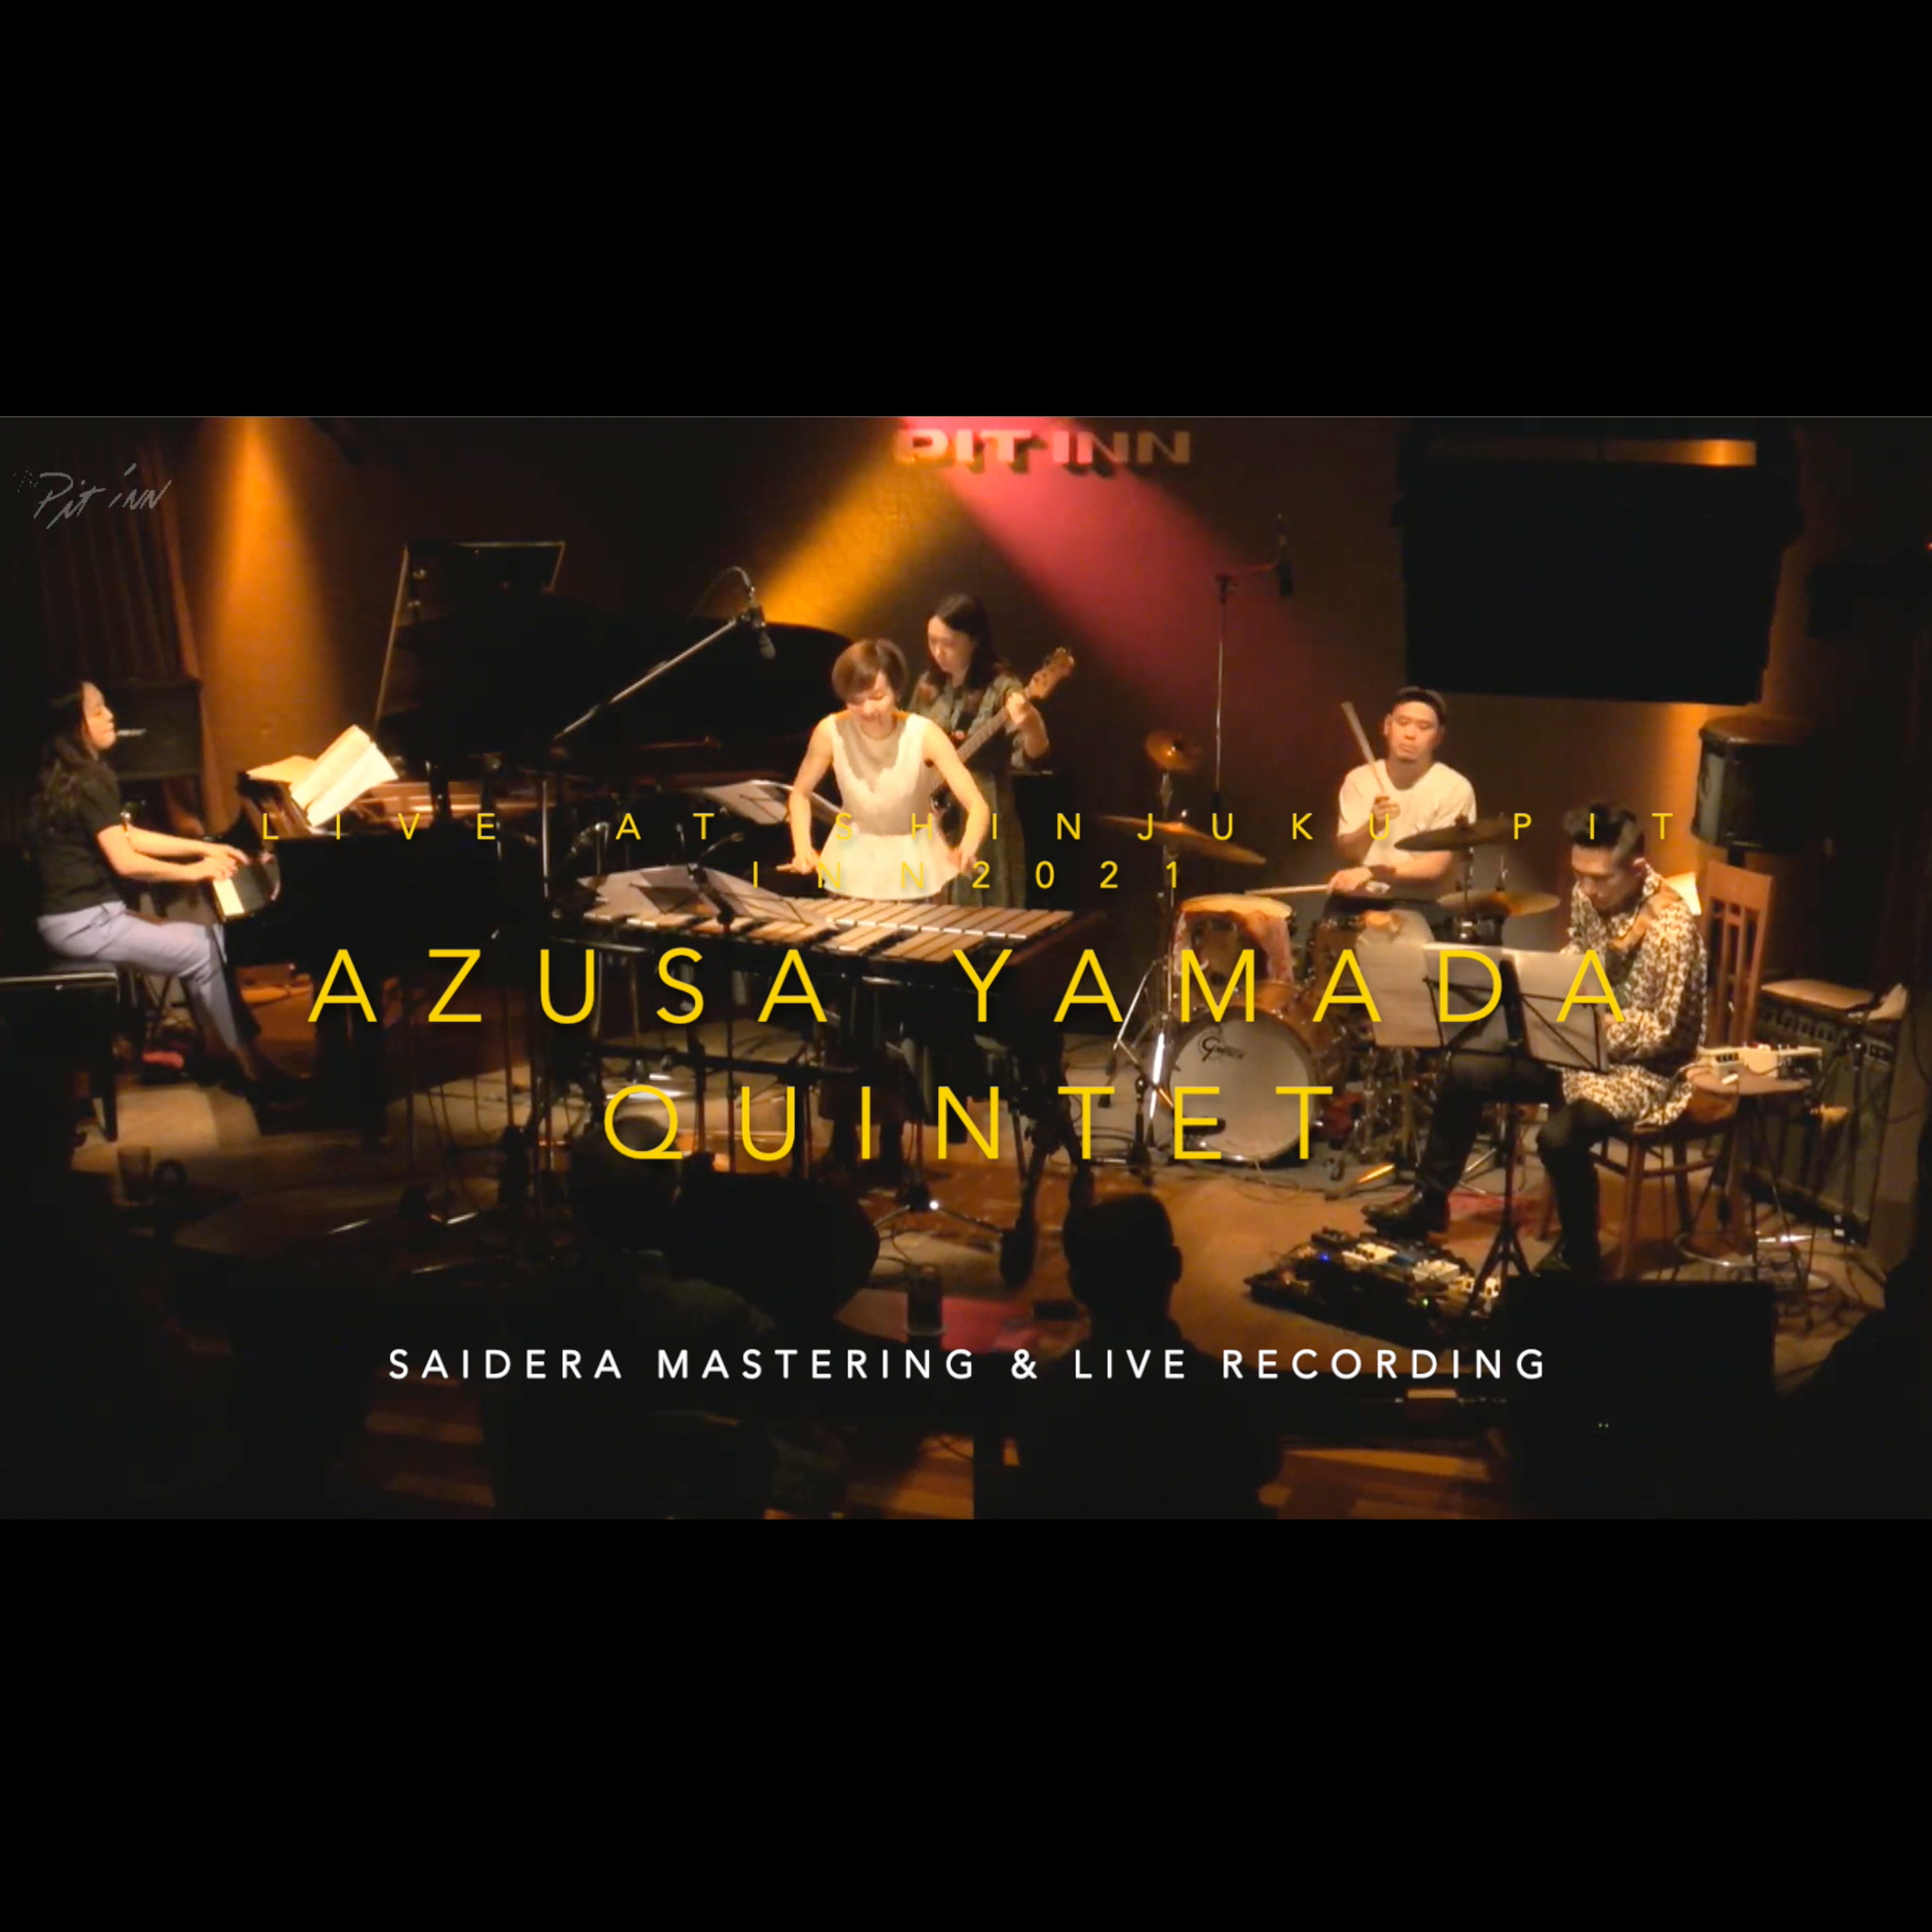 Azusa Yamada Quintet Live at Shinjuku PIT INN